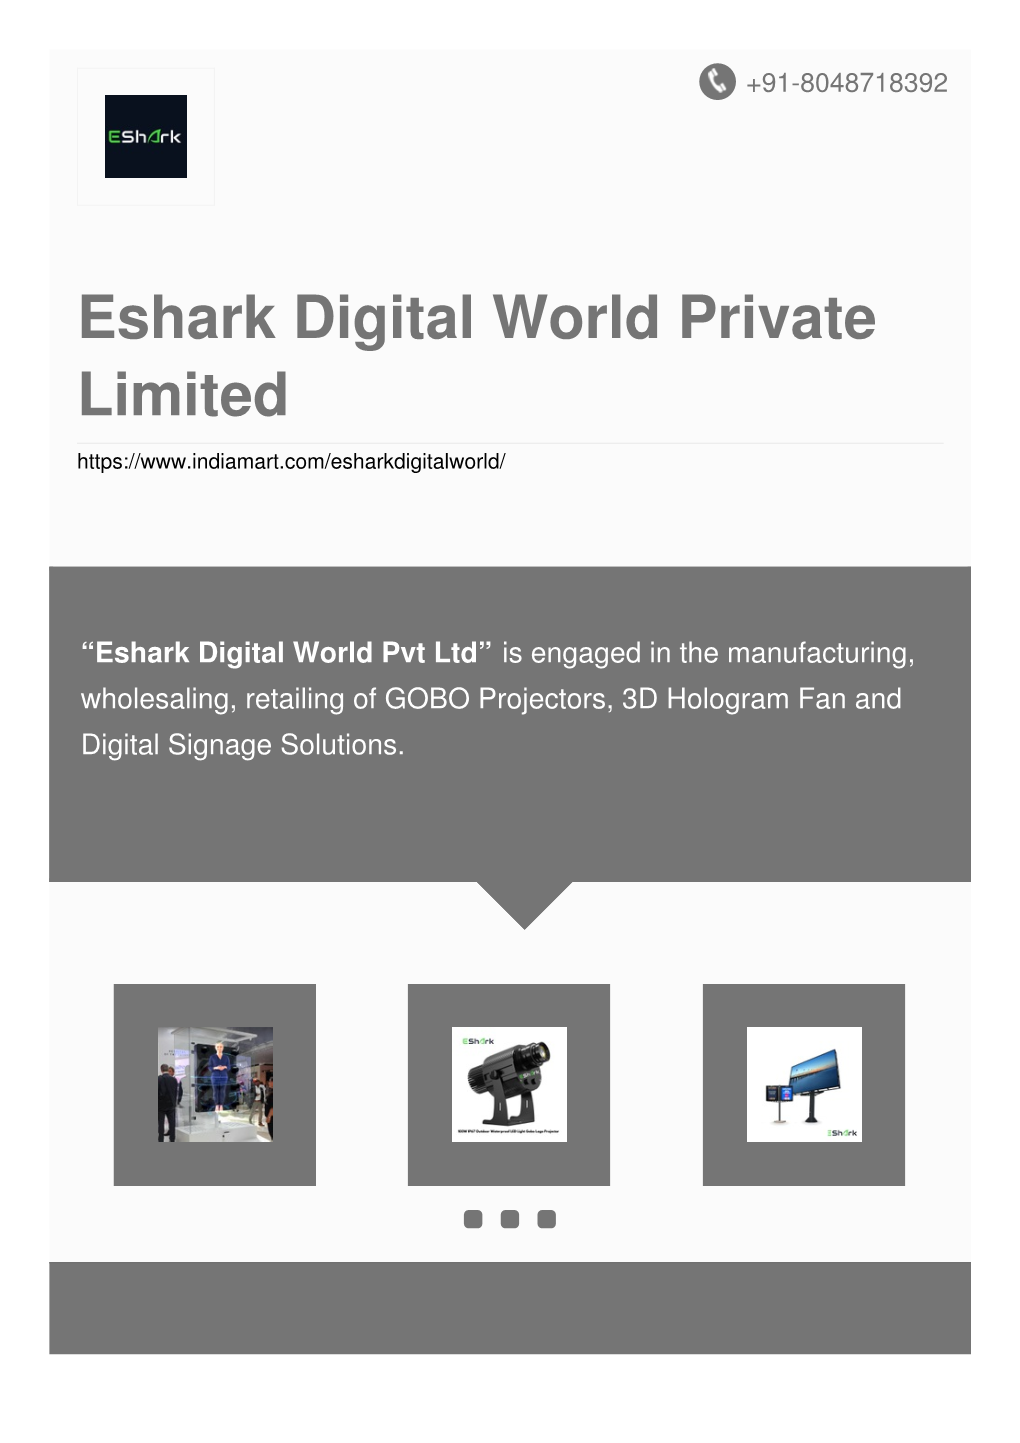 Eshark Digital World Private Limited